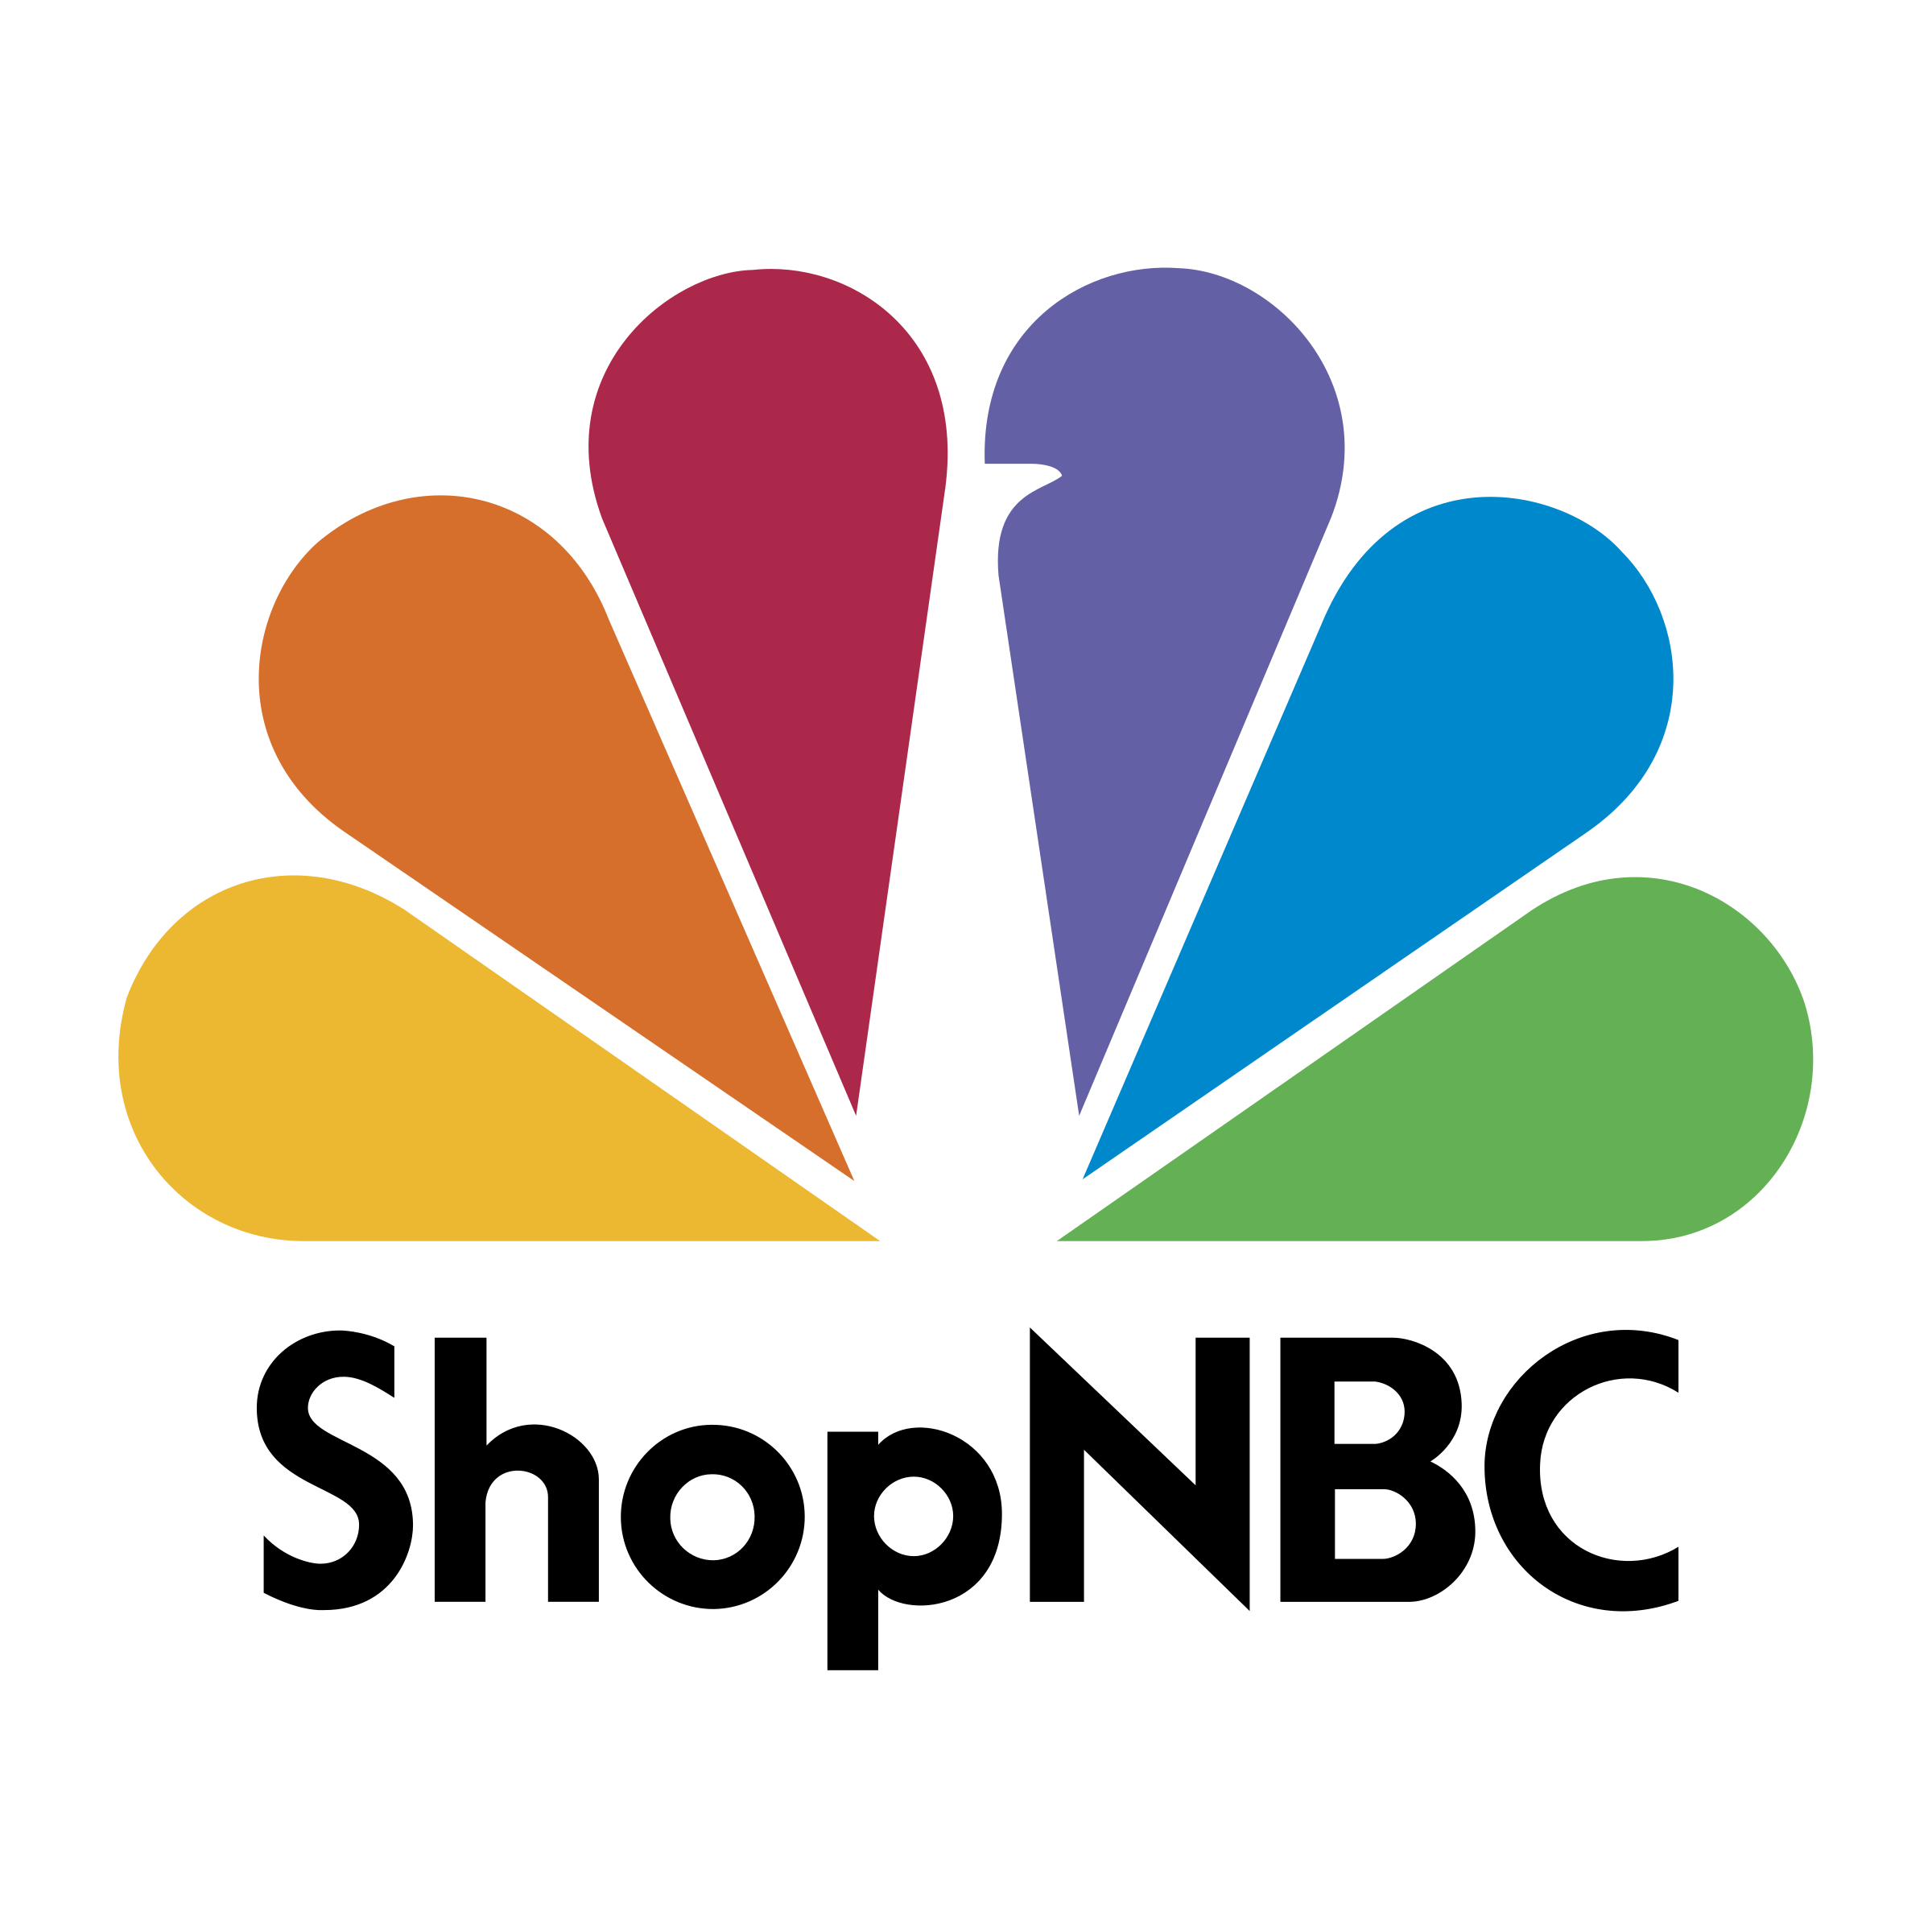 ShopNBC Logo - ShopNBC Logo PNG Transparent & SVG Vector